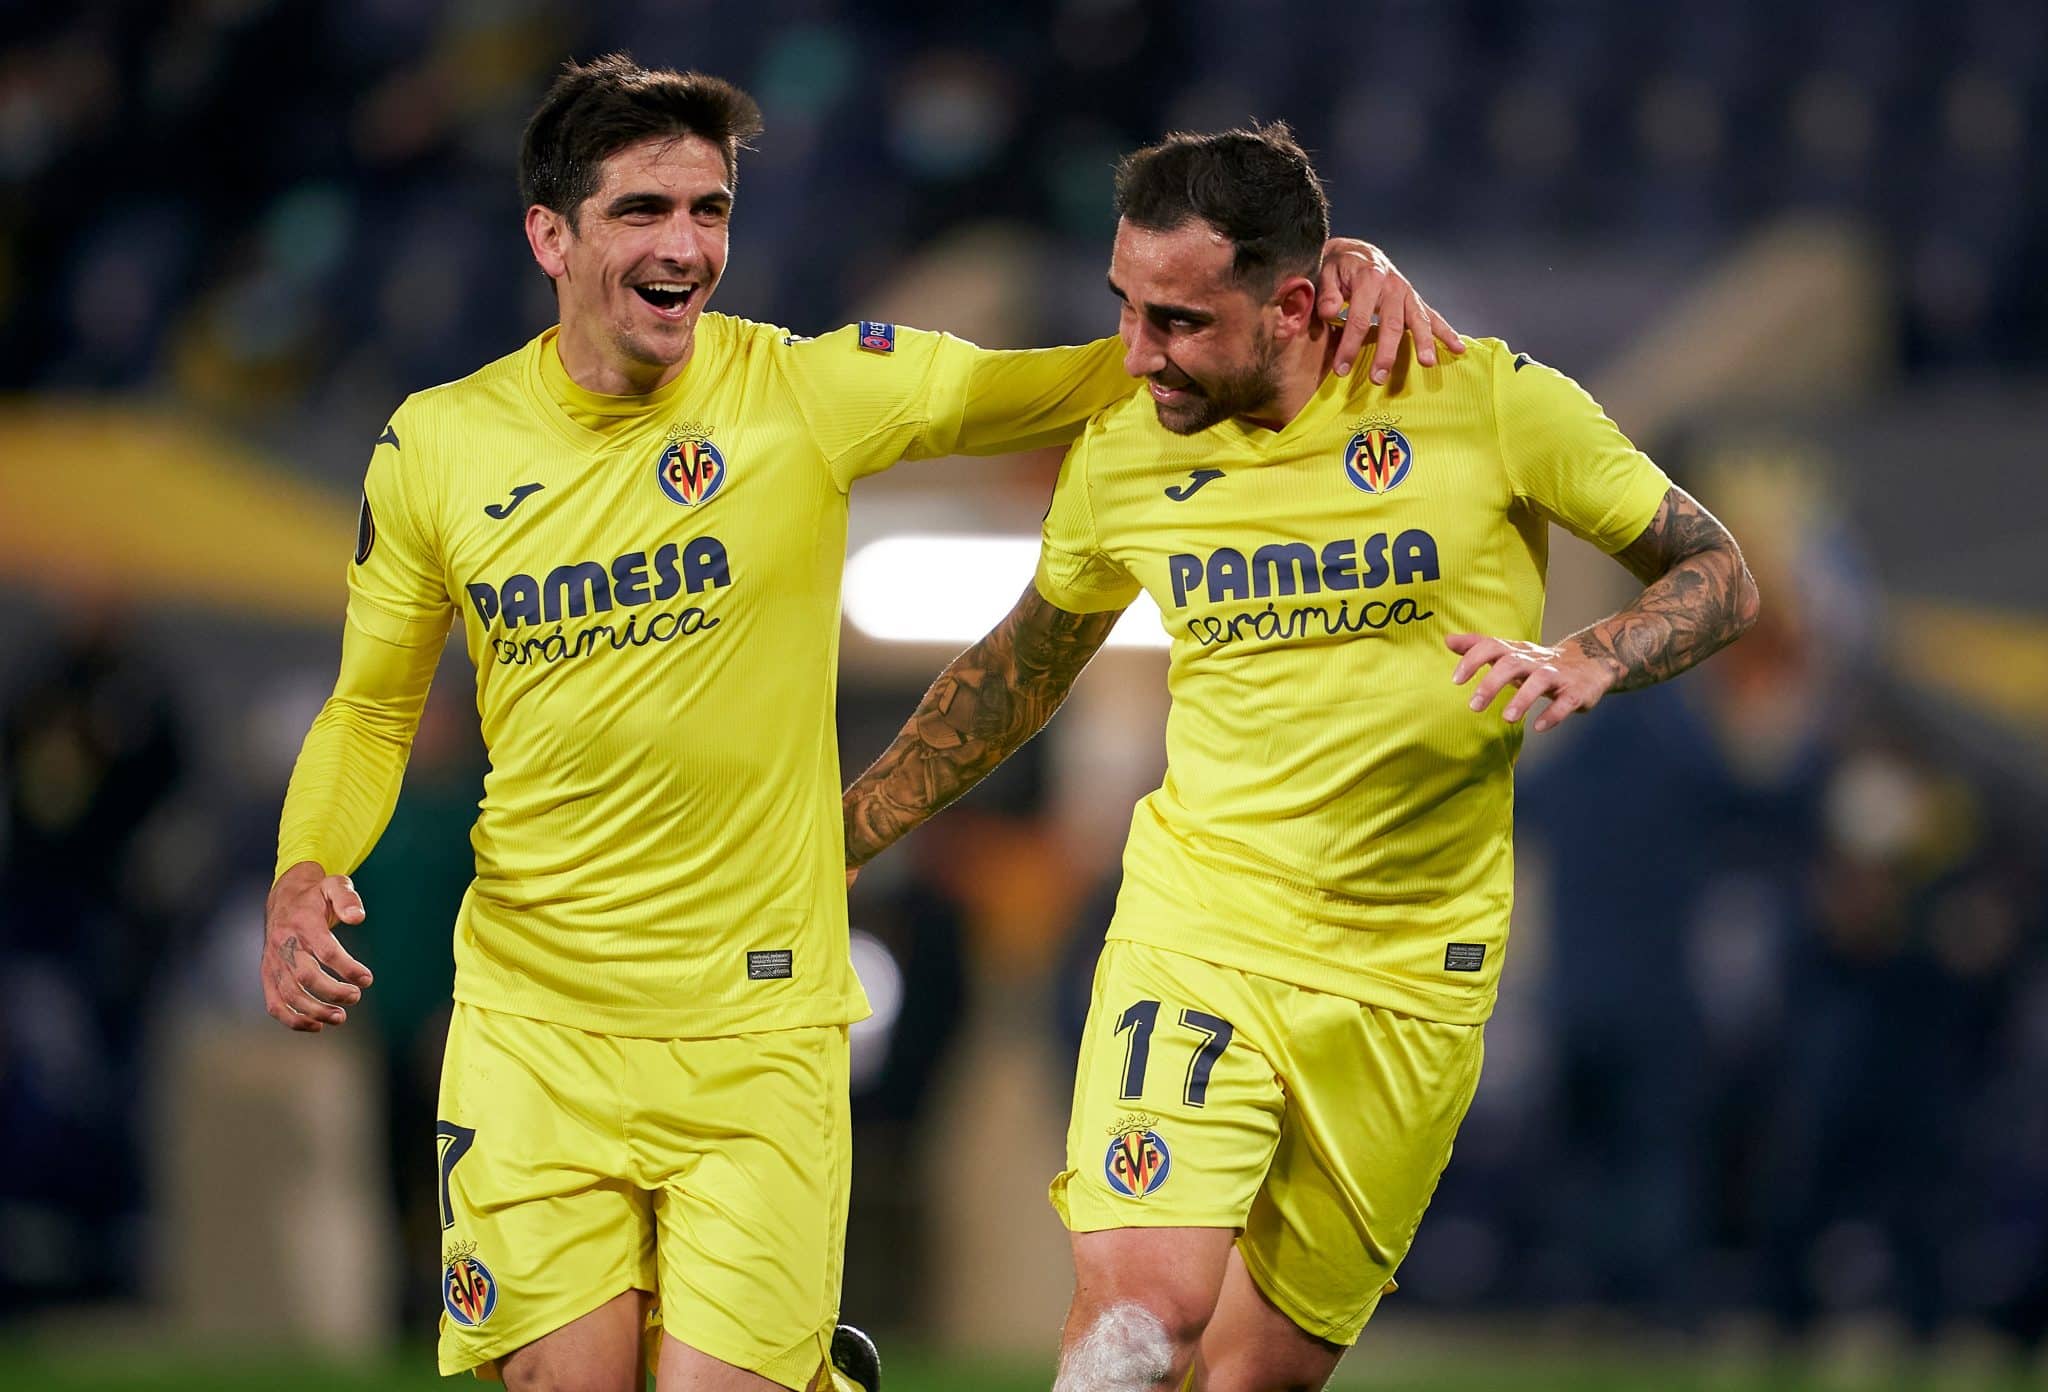 Villarreal CF activates the signing of a promising striker after Jutglá's rejection
